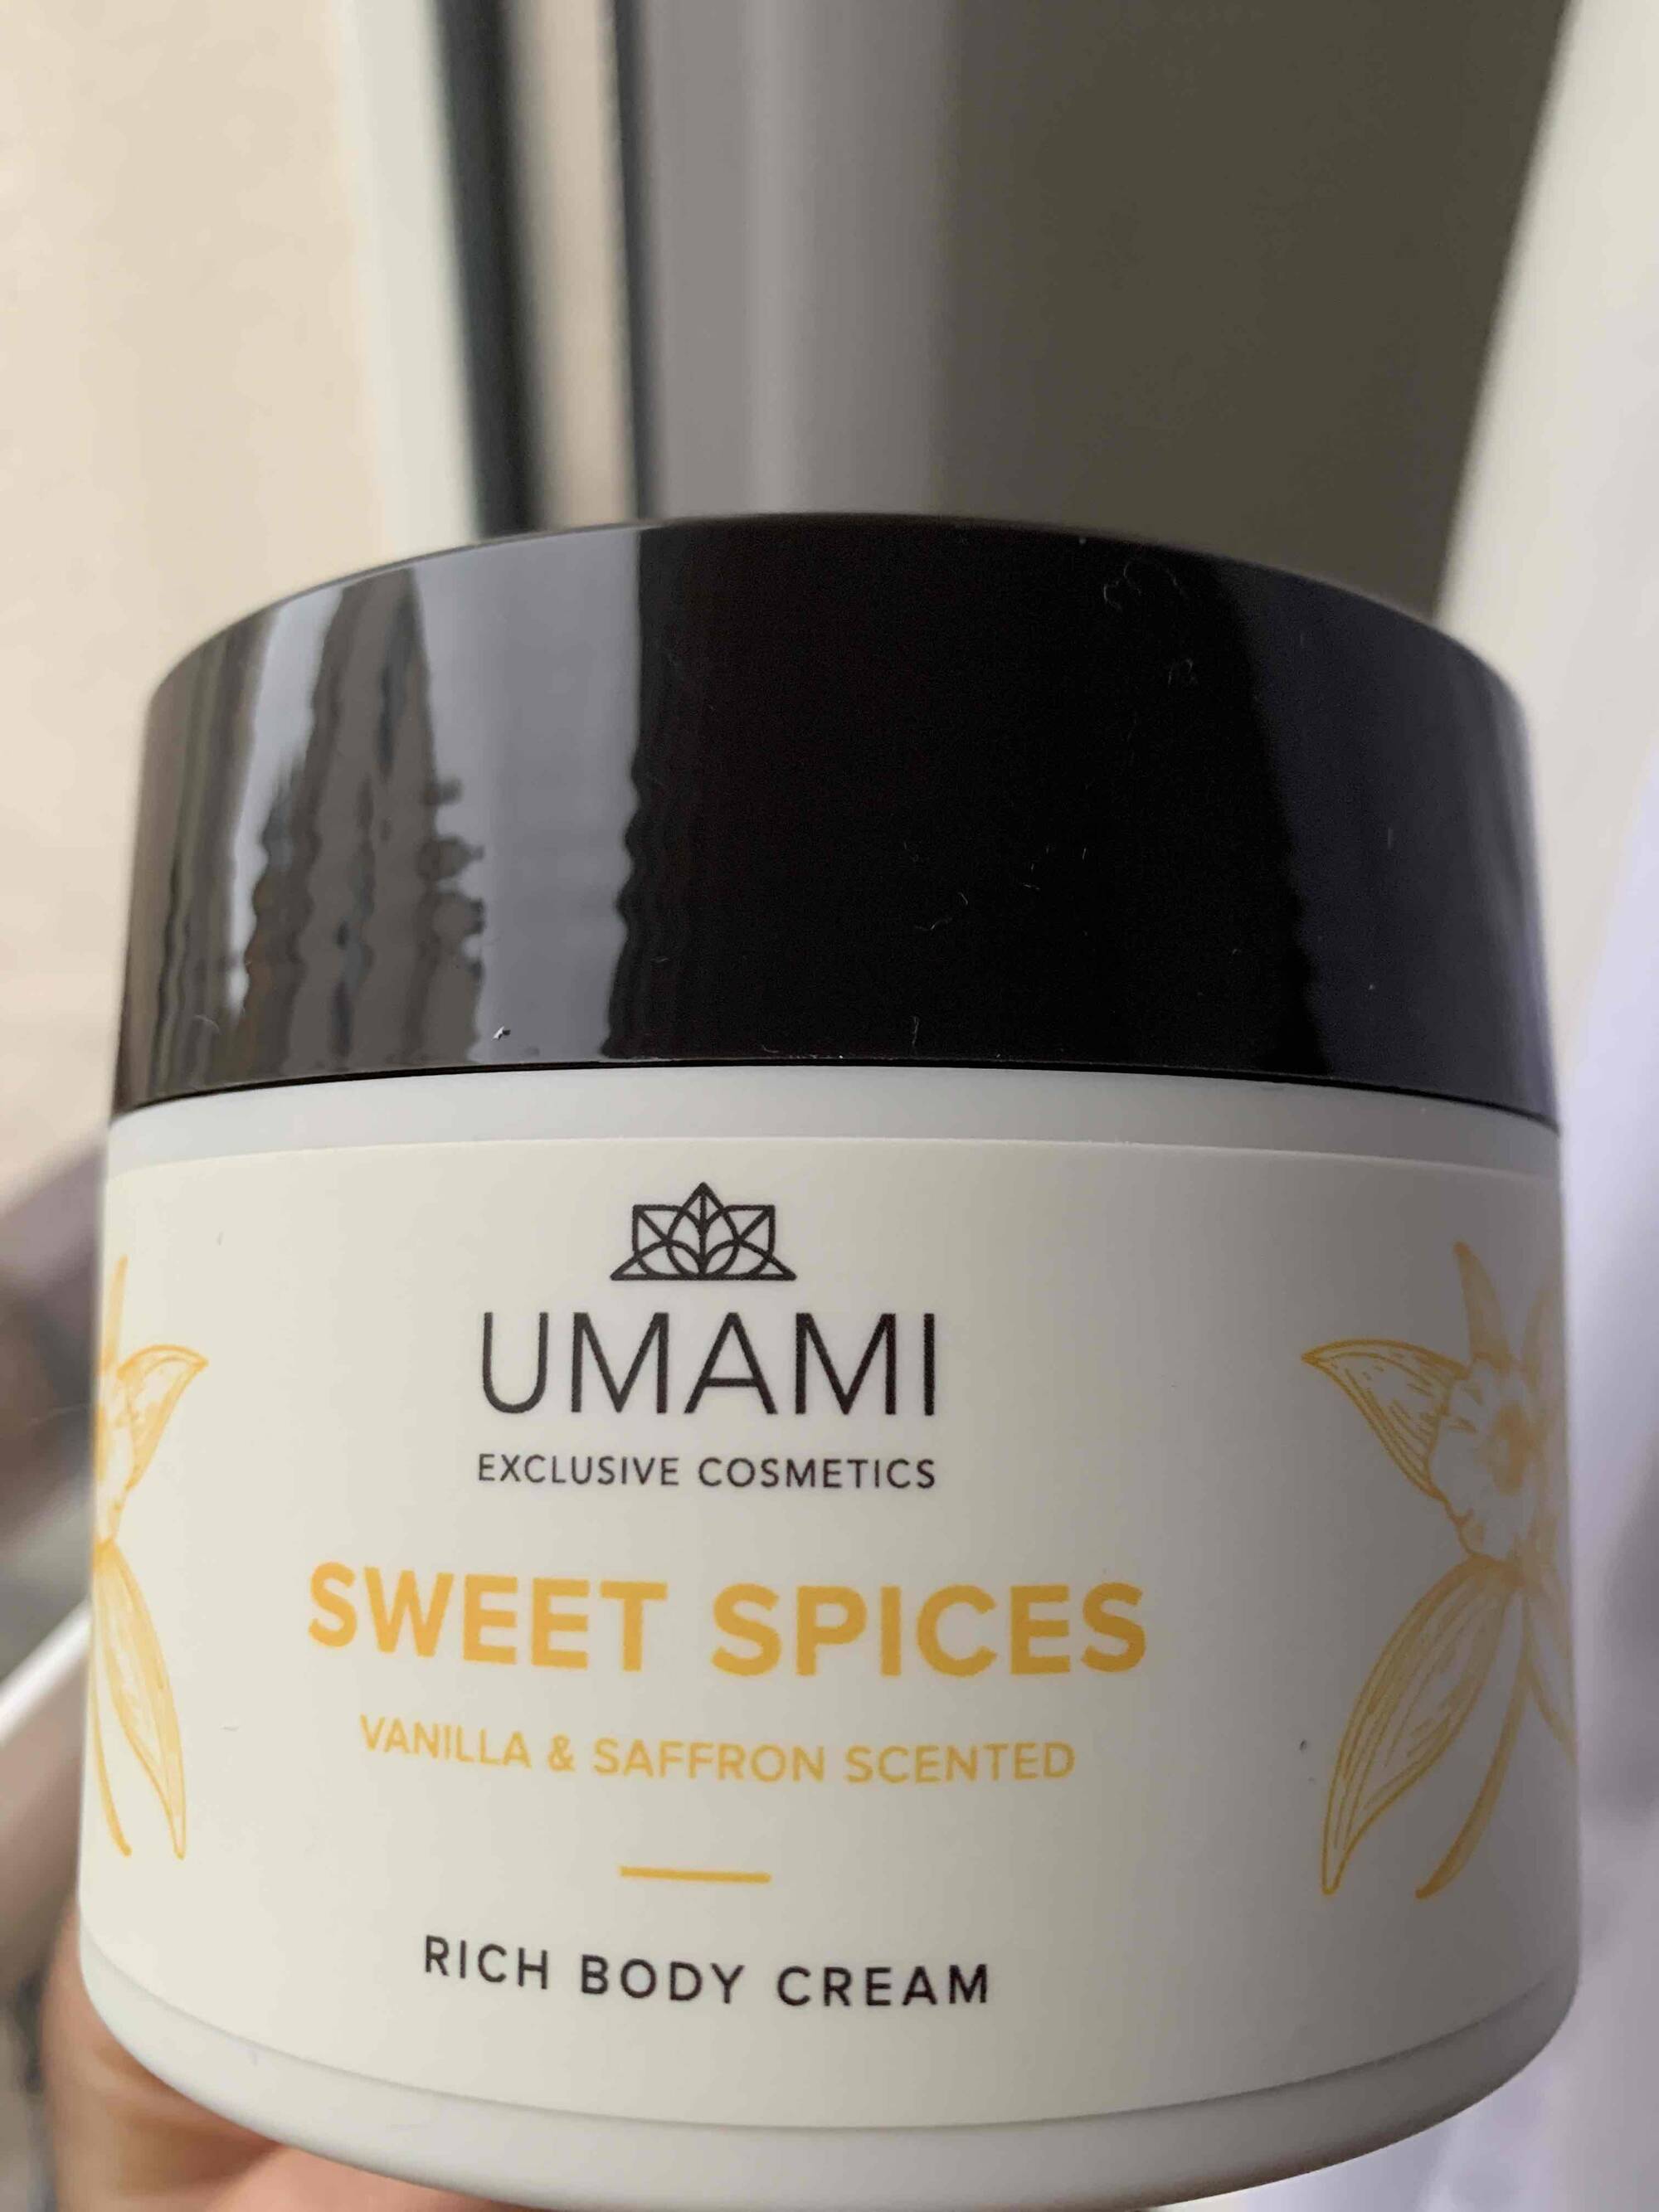 UMAMI - Sweet spices - Rich body cream